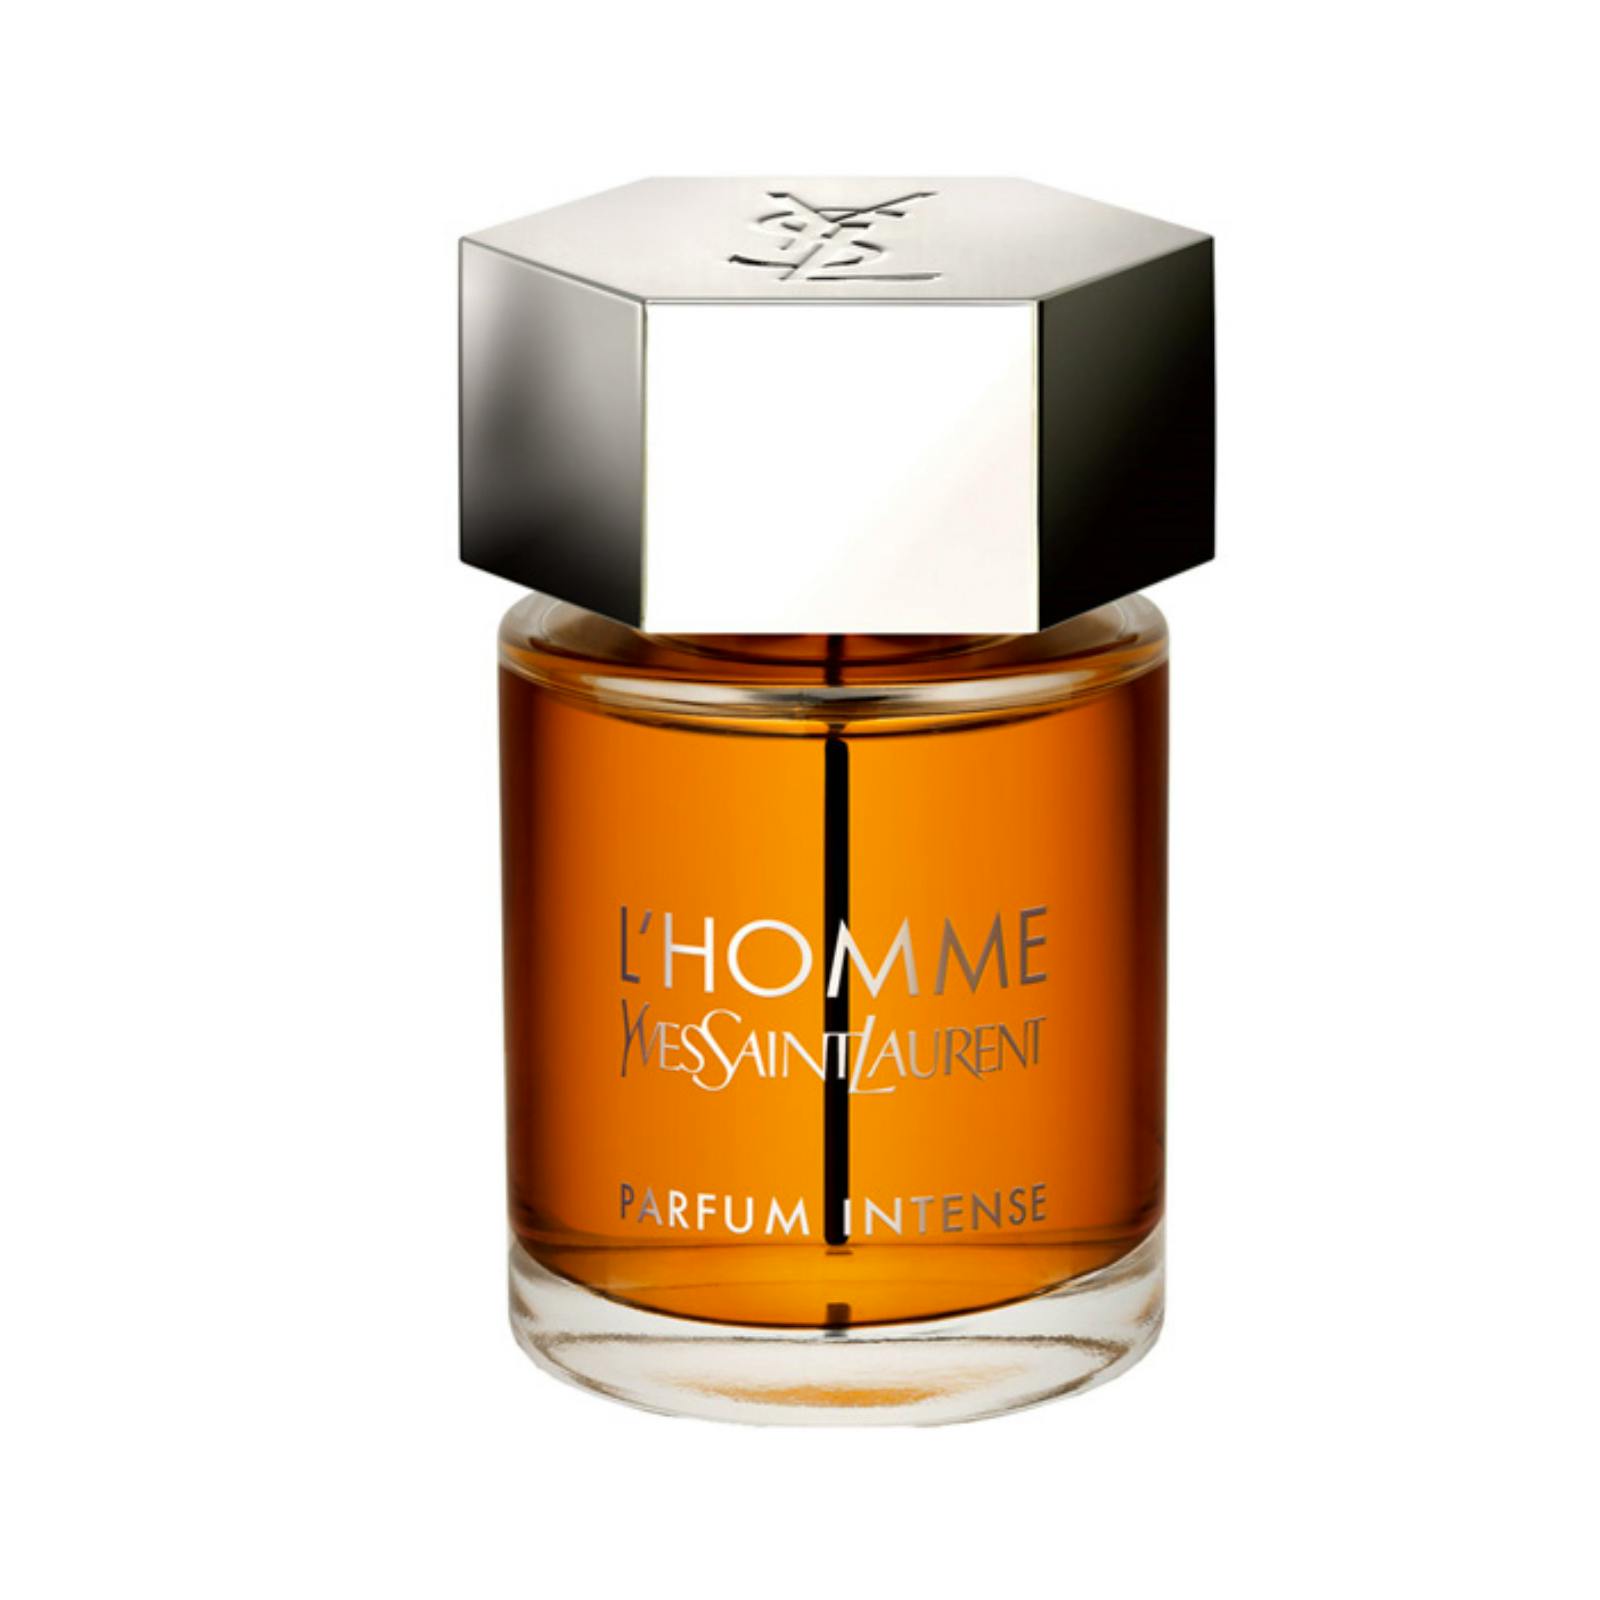 Yves Laurent L'Homme Intense Parfum 60 ml 419.95 kr